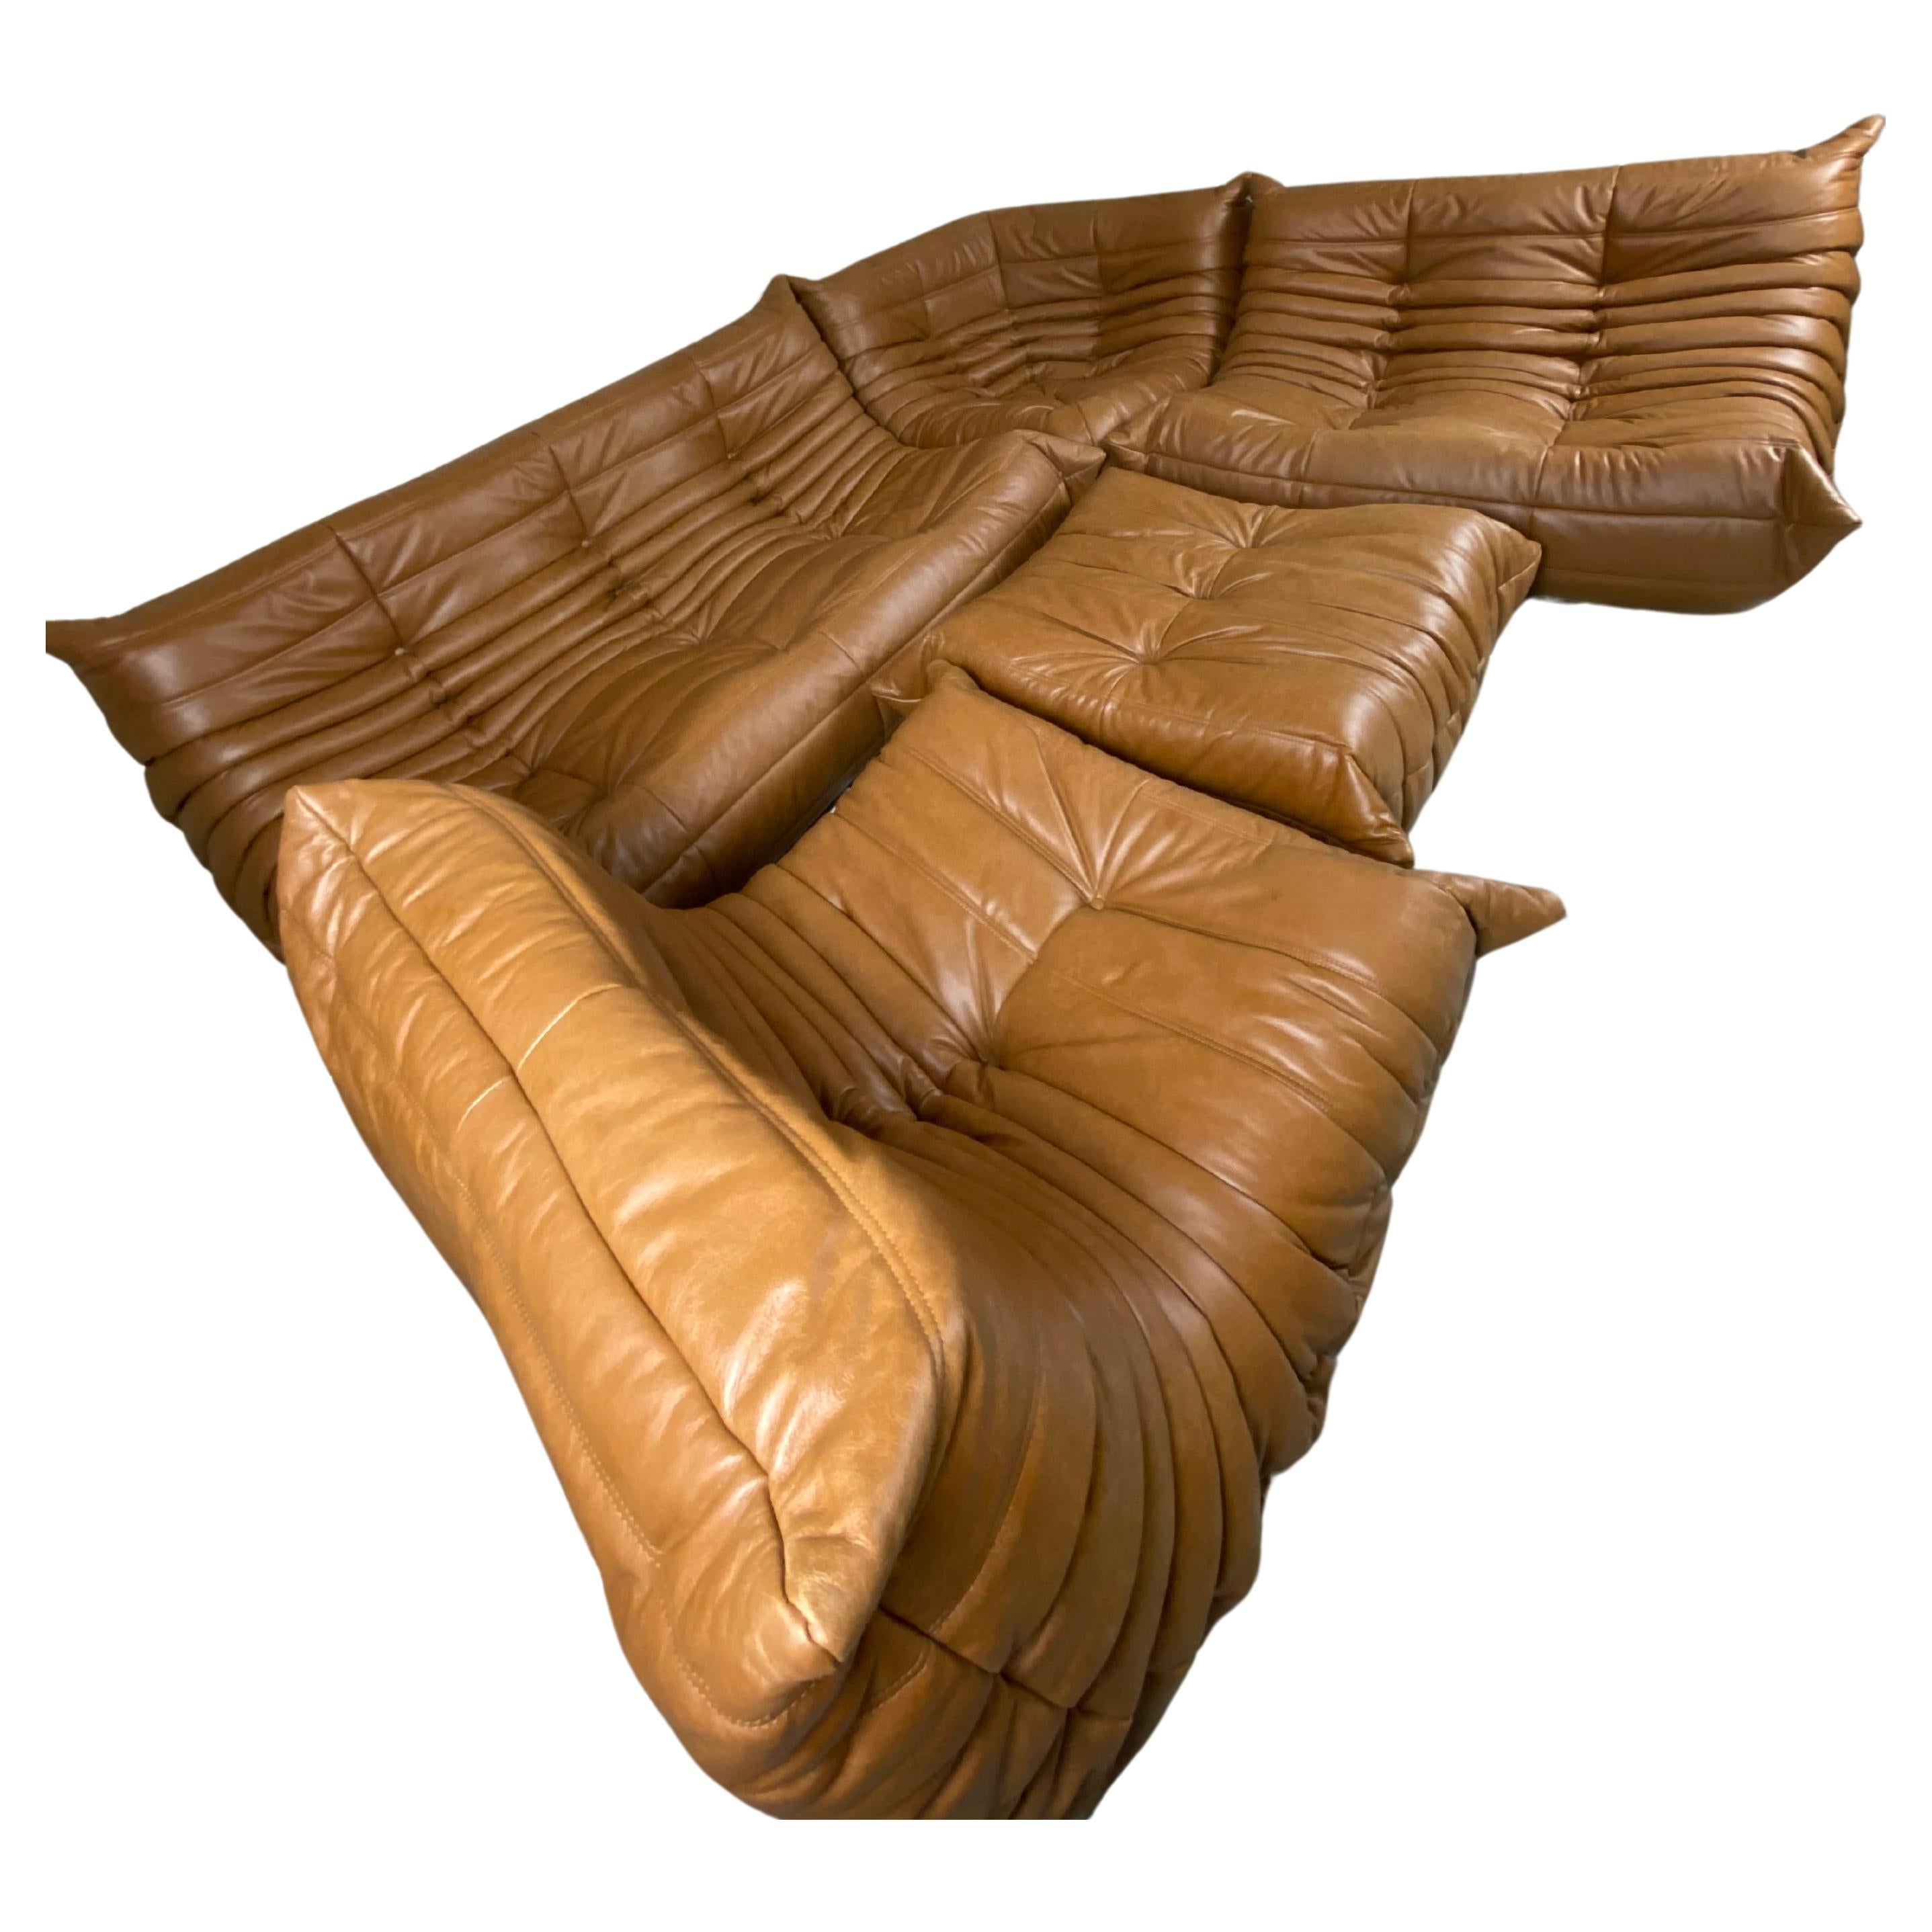 Can I dye a leather sofa?